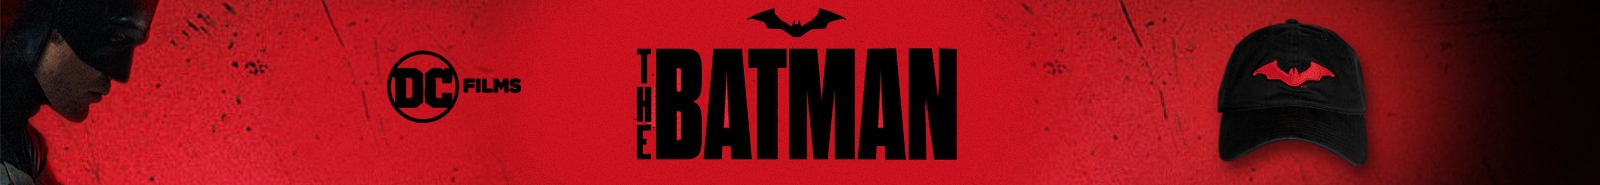 Batman Merchandise Banner